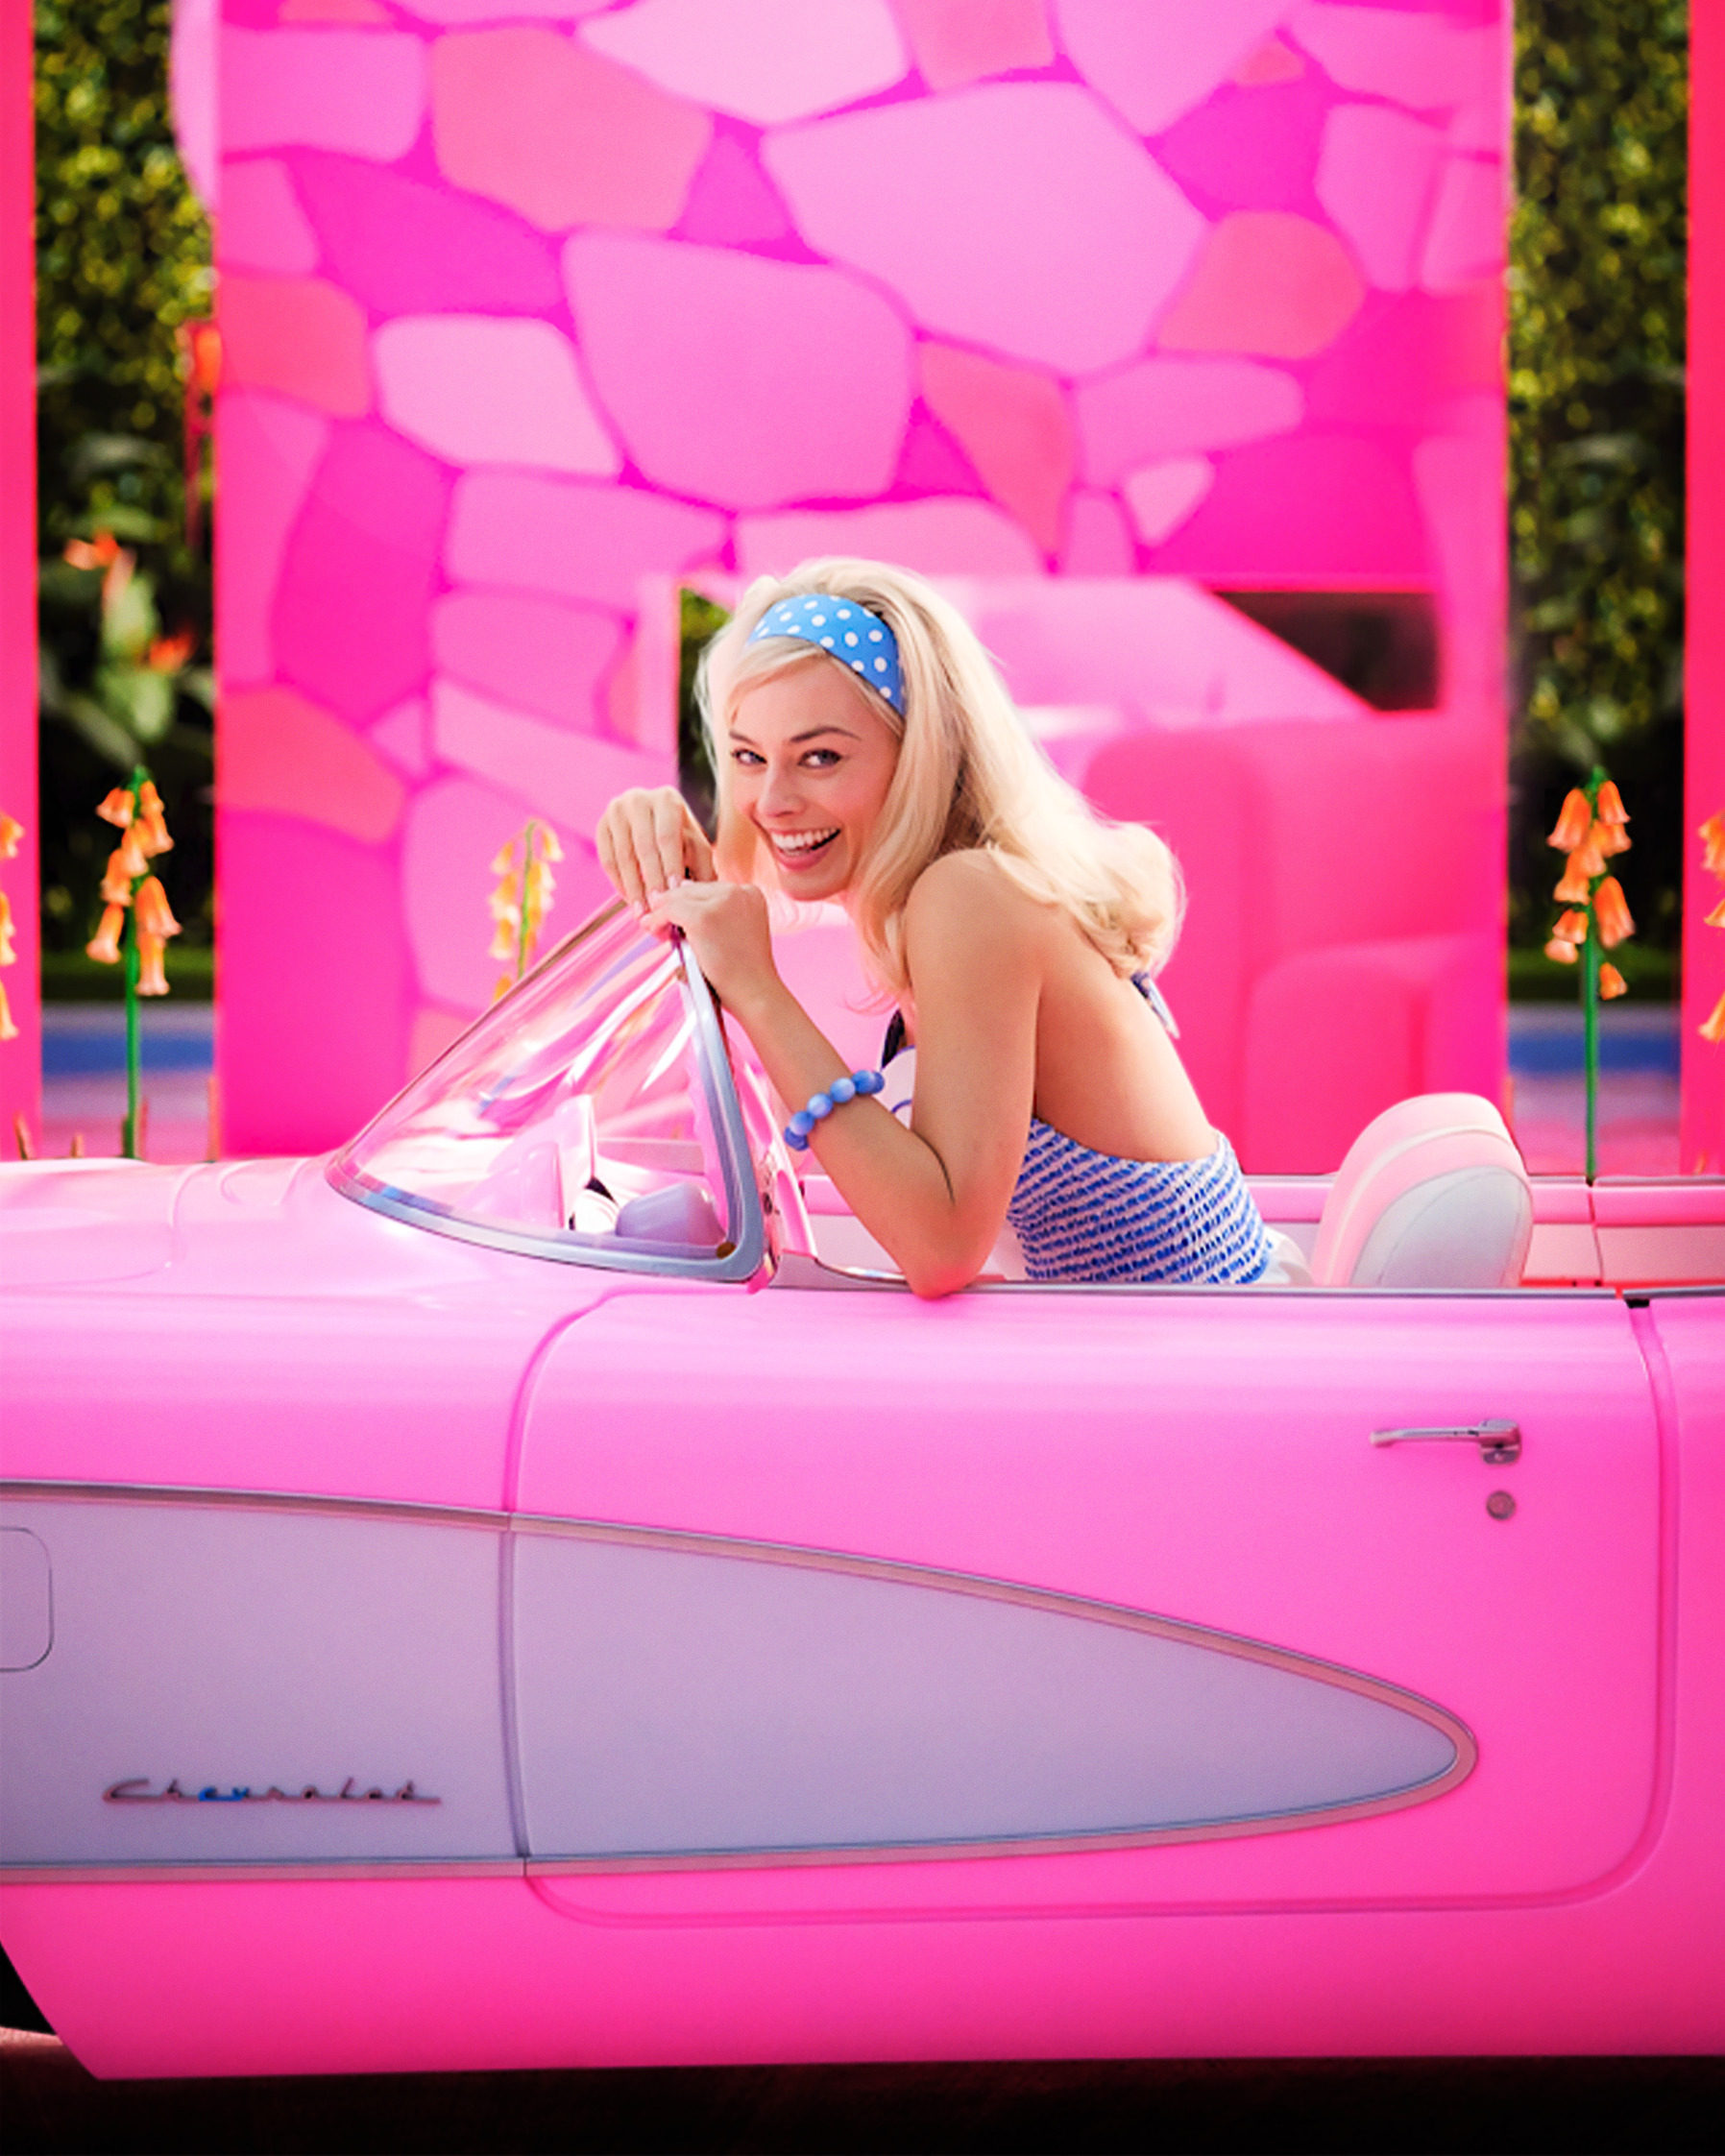 Margot Robbie in a still from “Barbie”. Photo: Jaap Buitendijk.